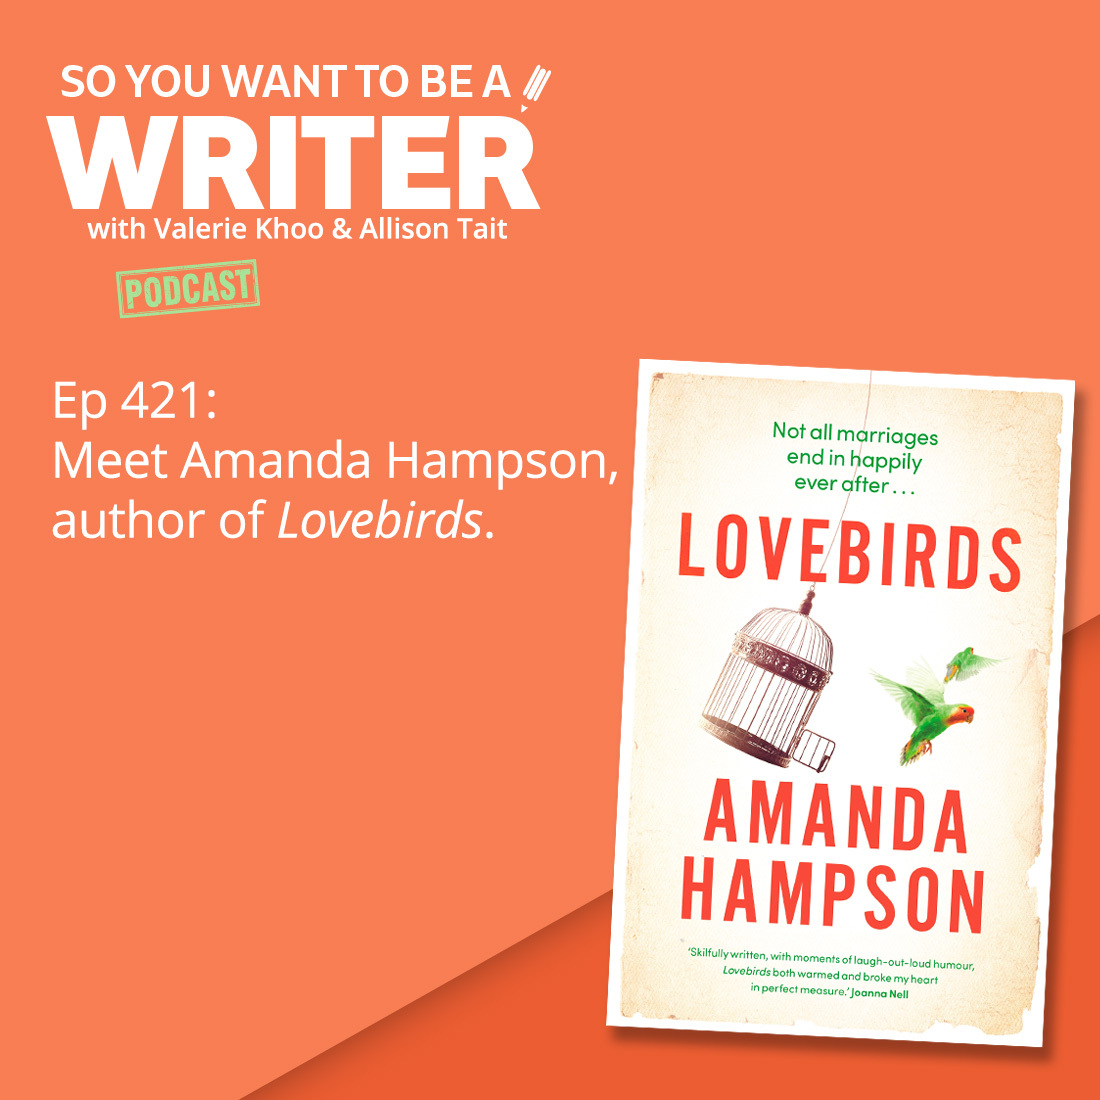 WRITER 421: Meet Amanda Hampson, author of 'Lovebirds'.